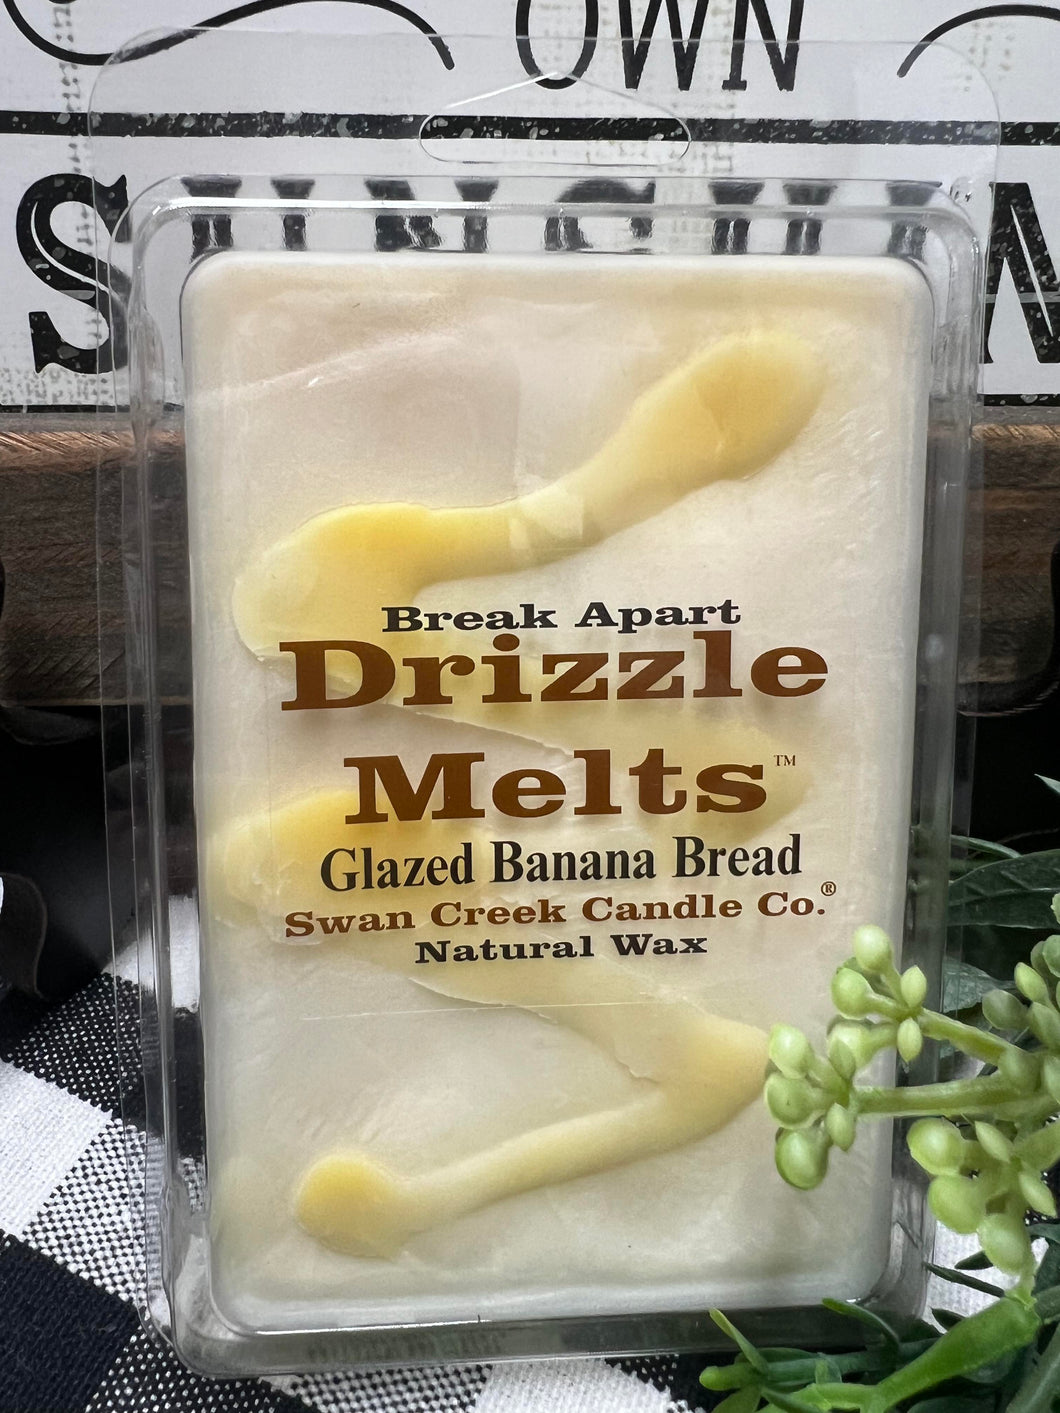 Swan Creek Candle Co. Glazed Banana Bread Drizzle Melts